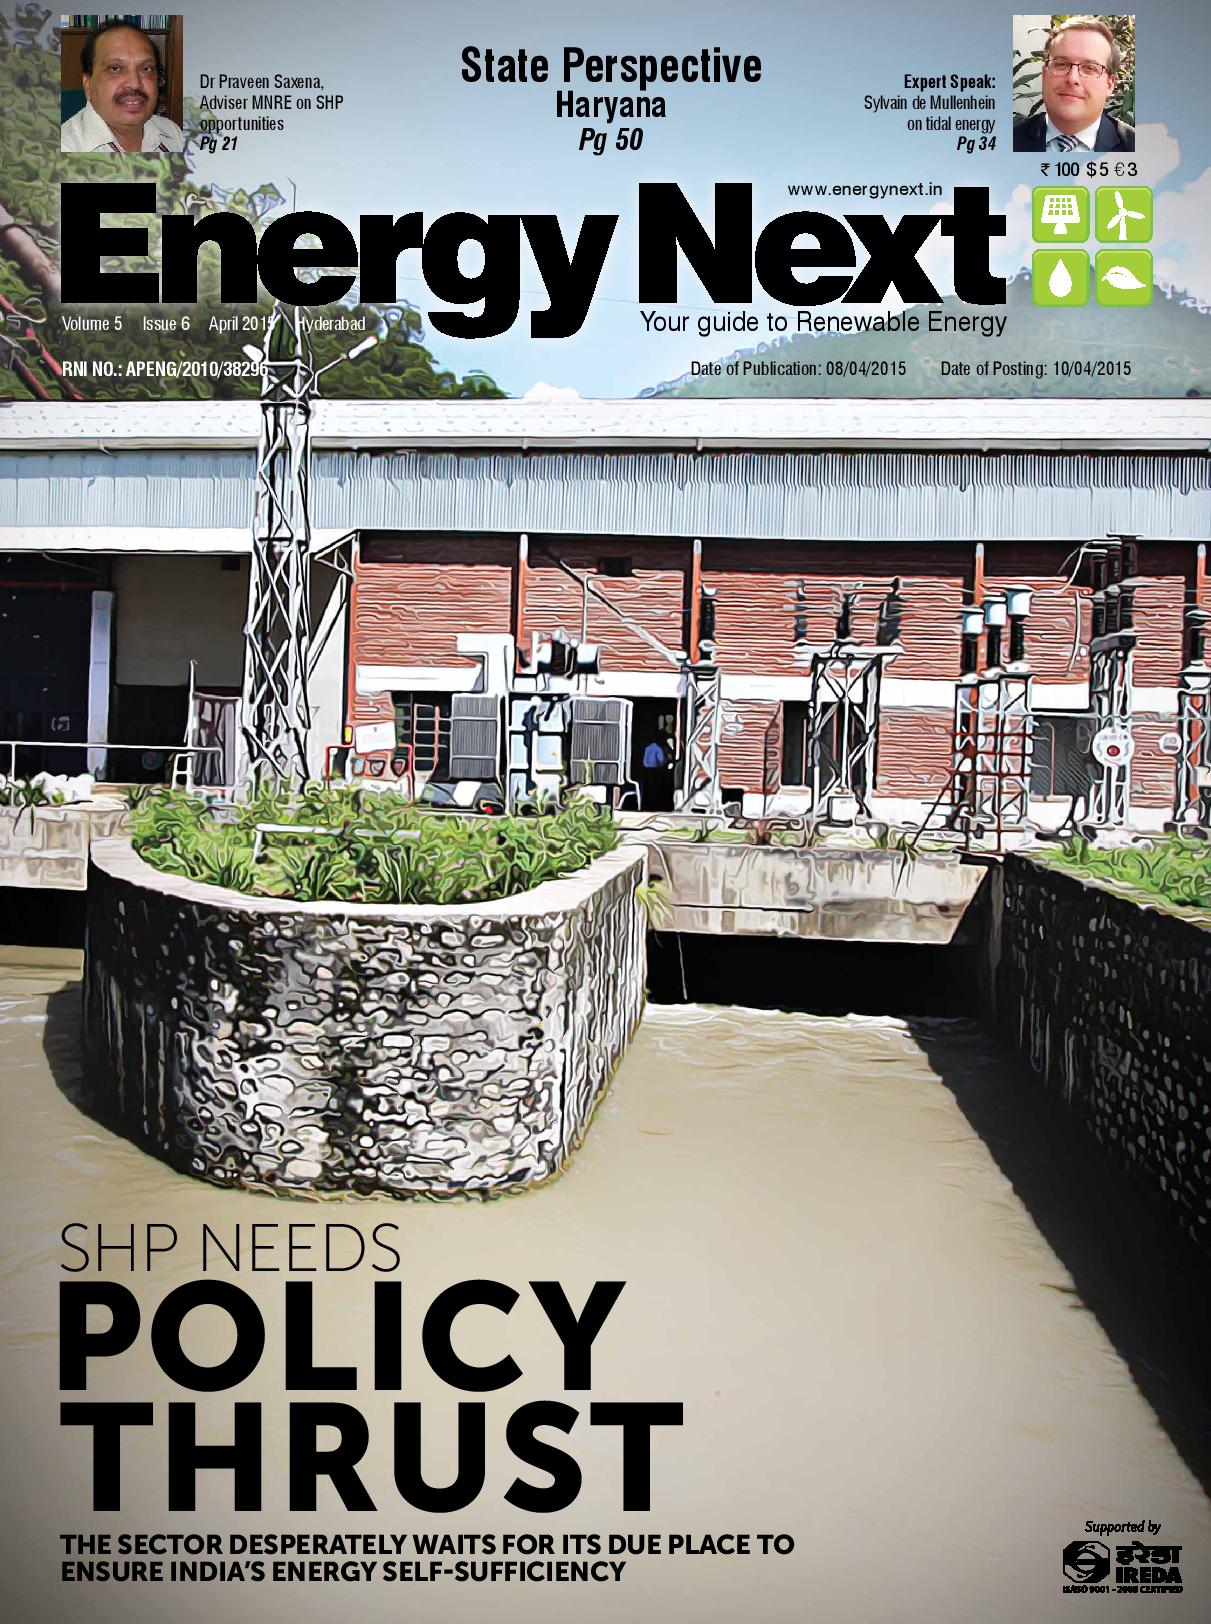 EnergyNext Vol 05 issue 6 Apr 2015